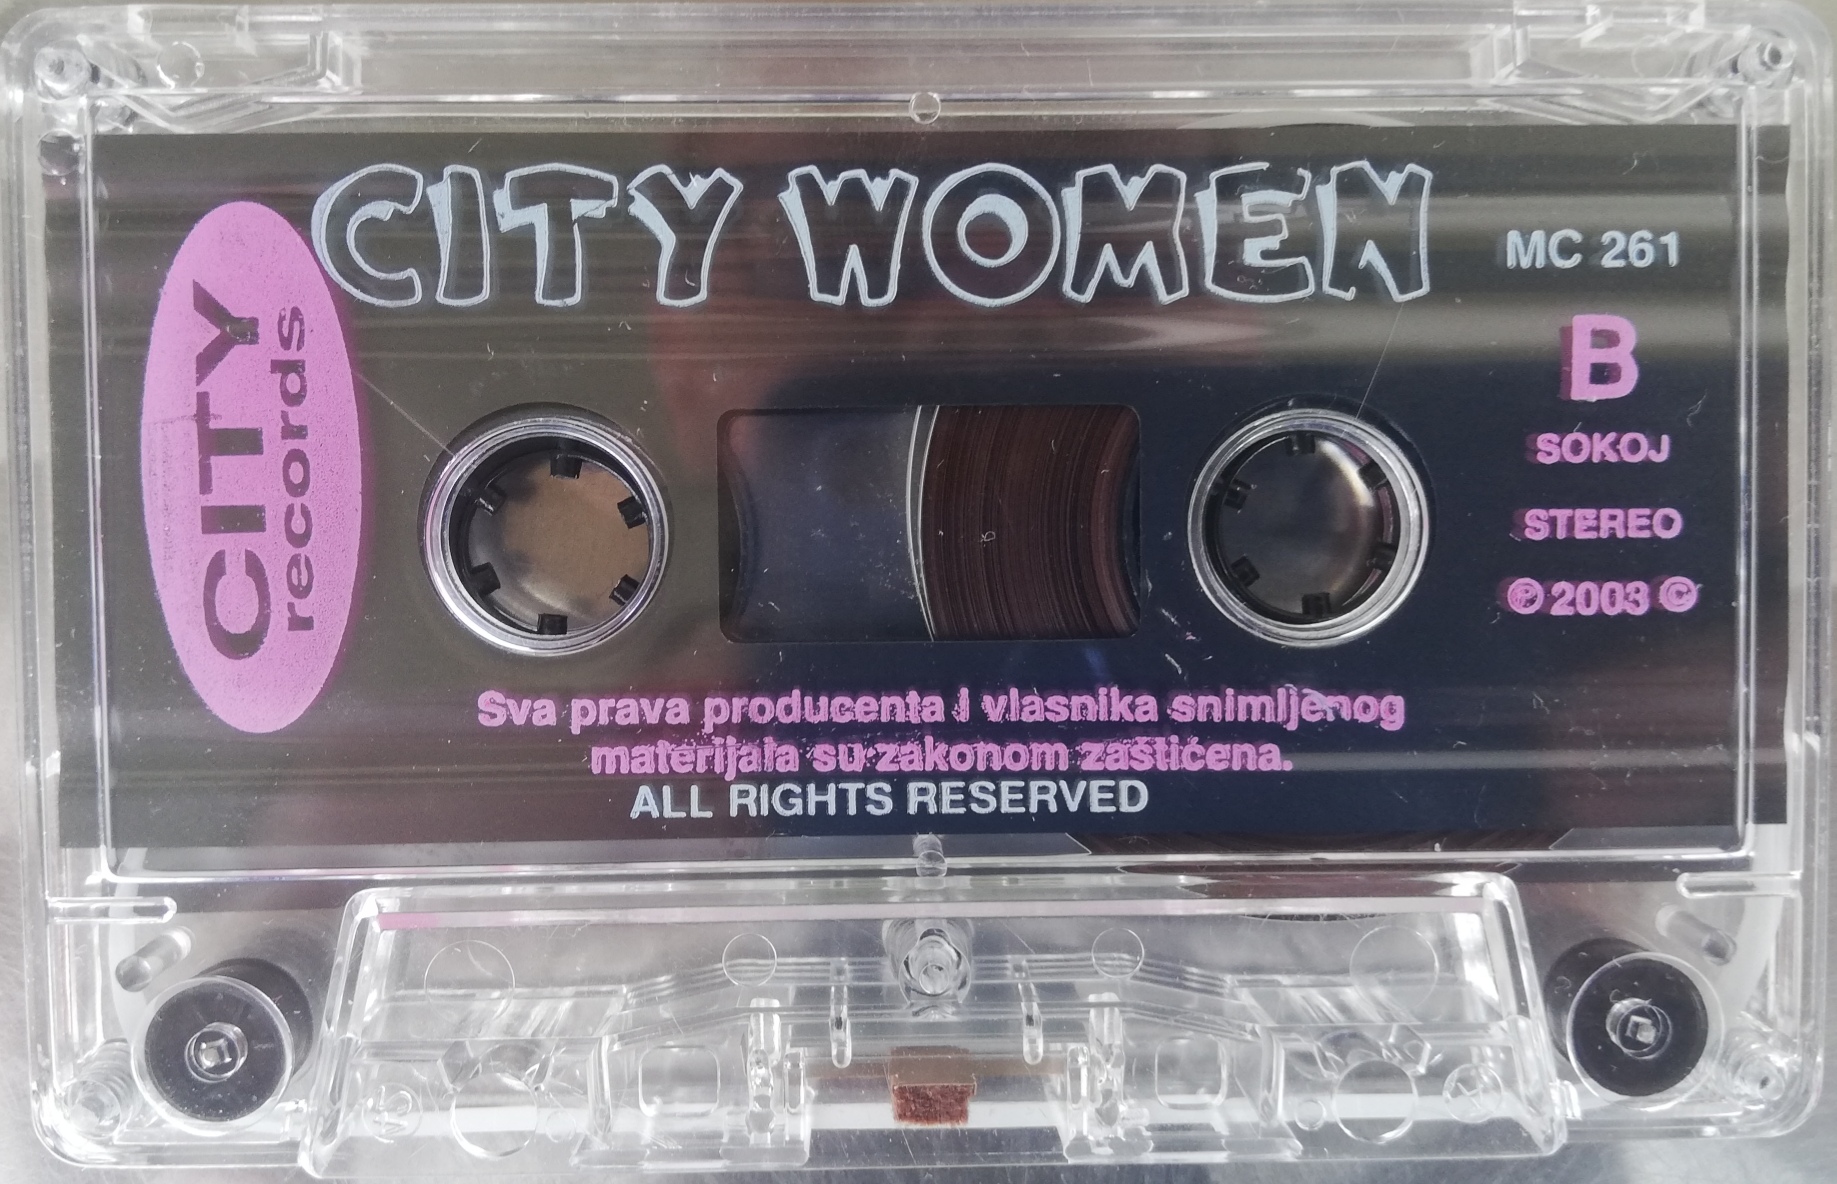 City Women 2003 4